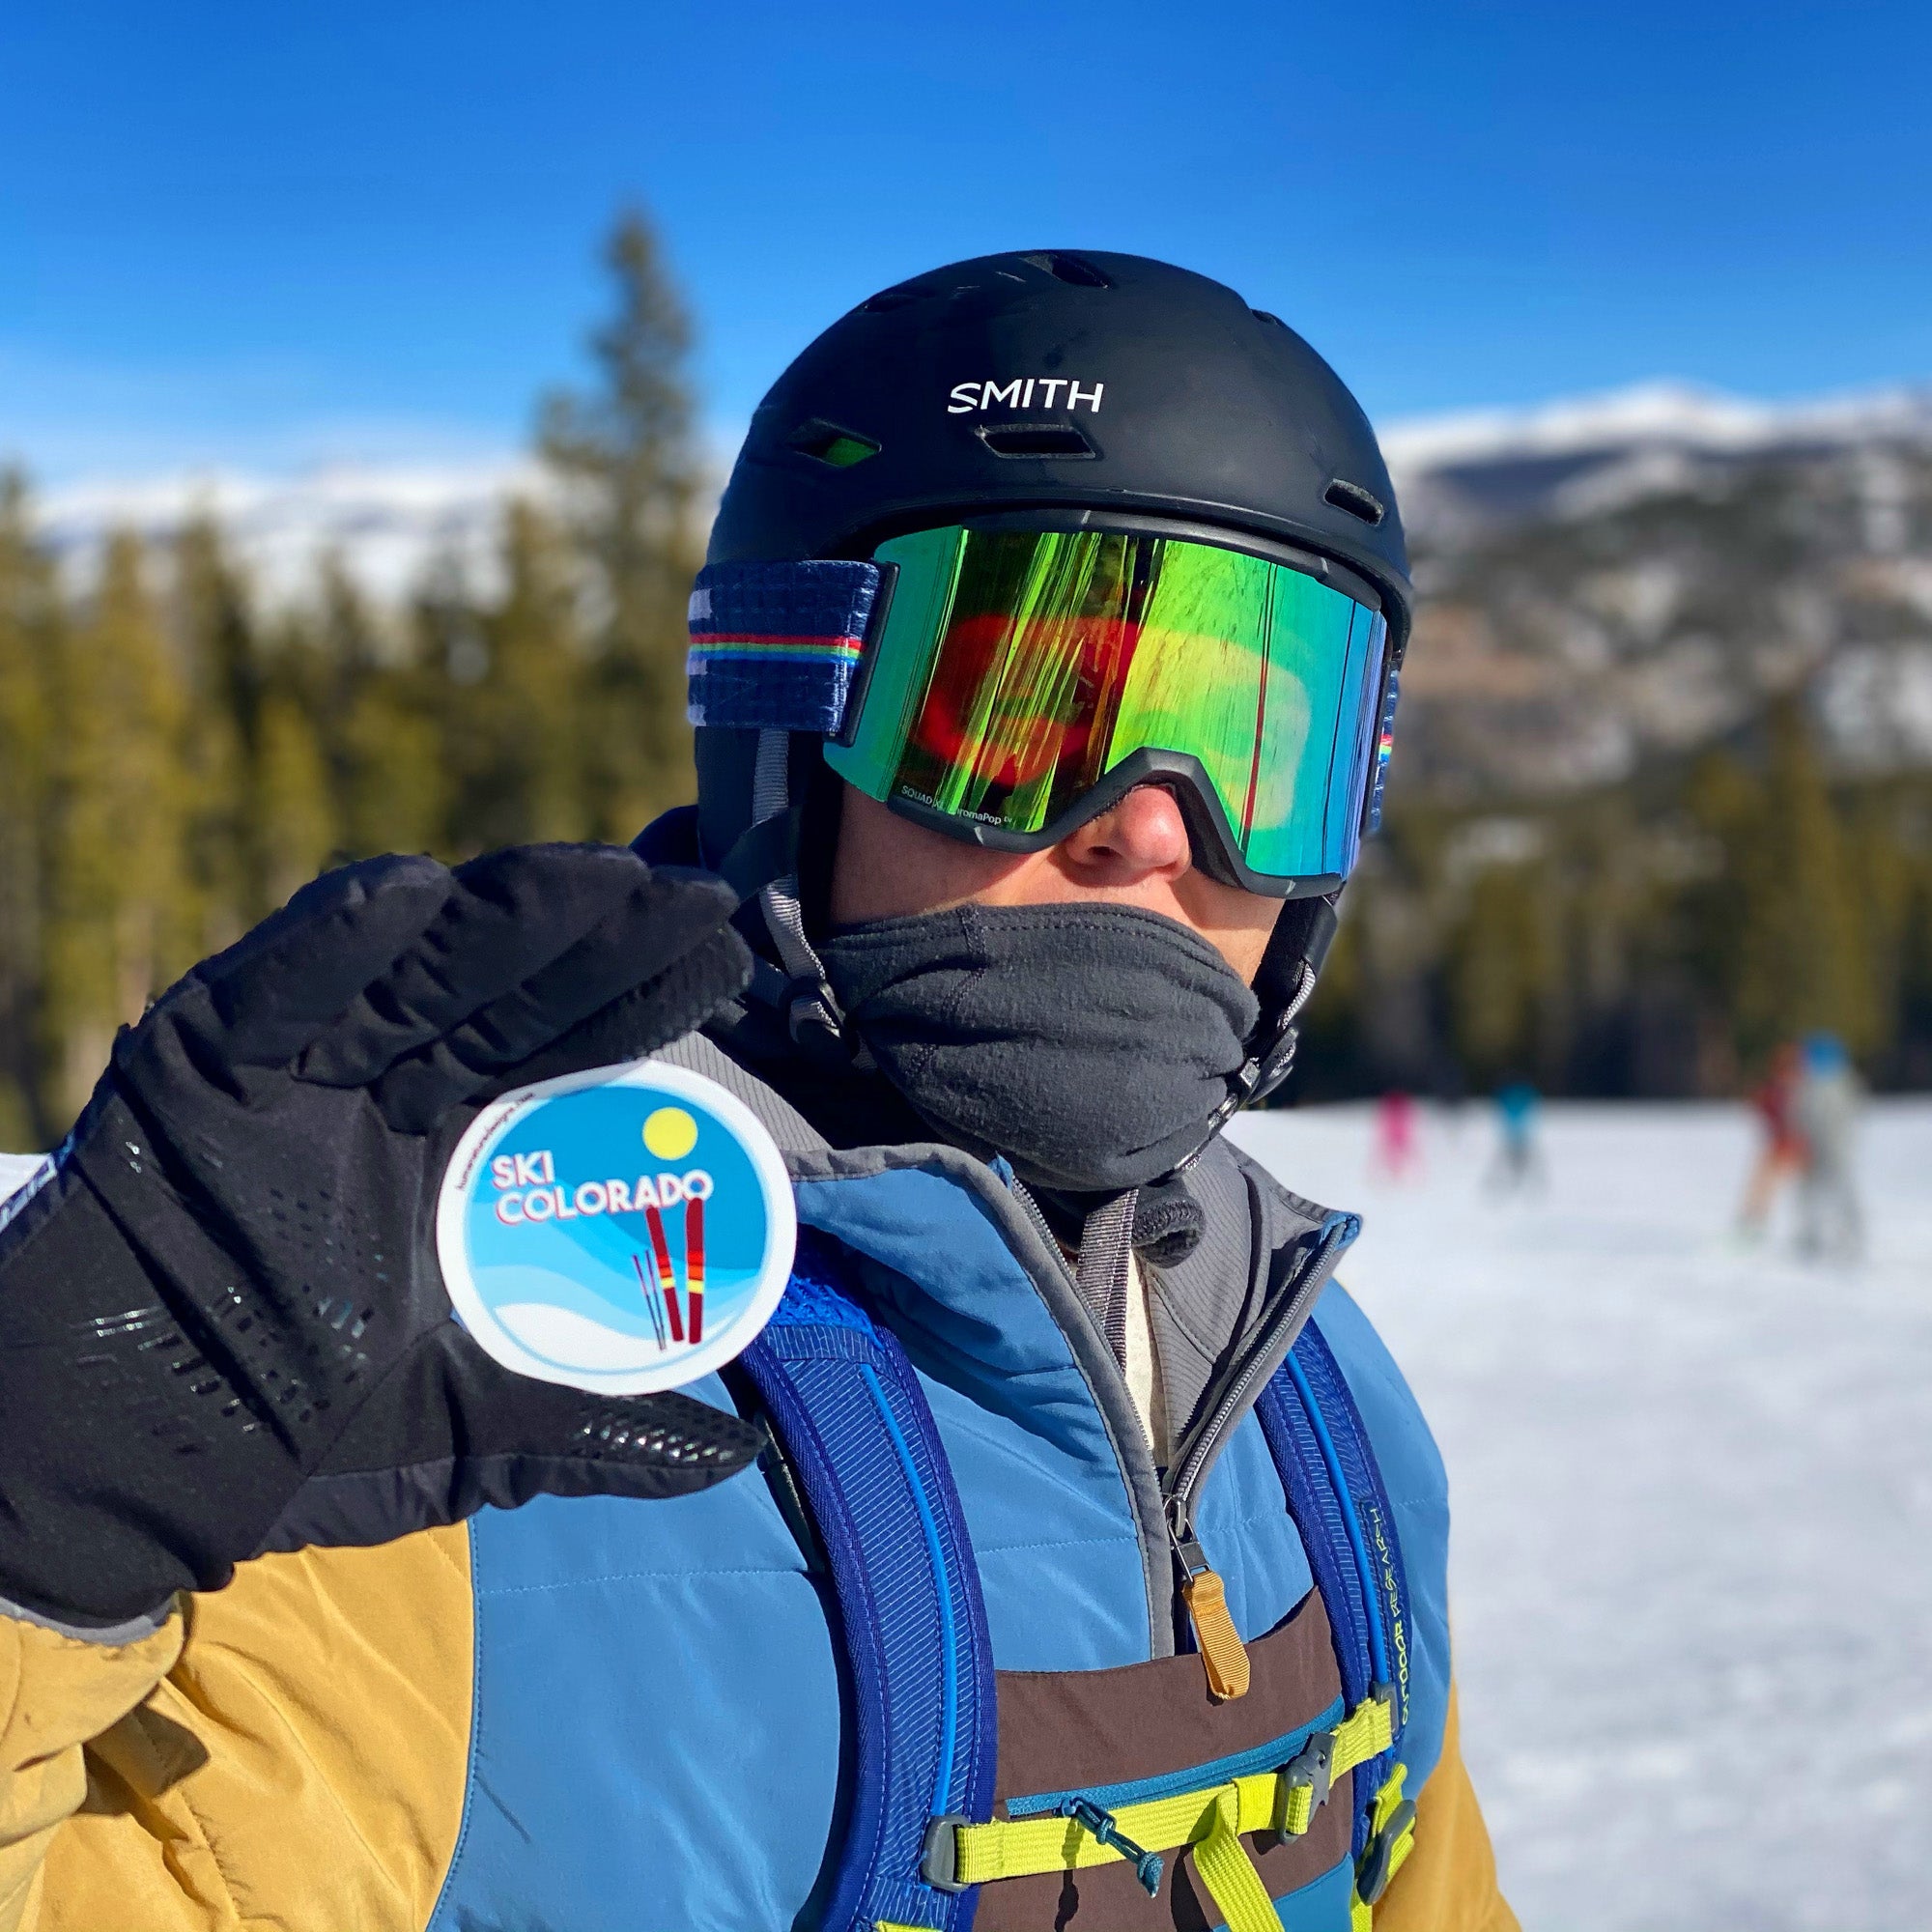 Ski Colorado Sticker